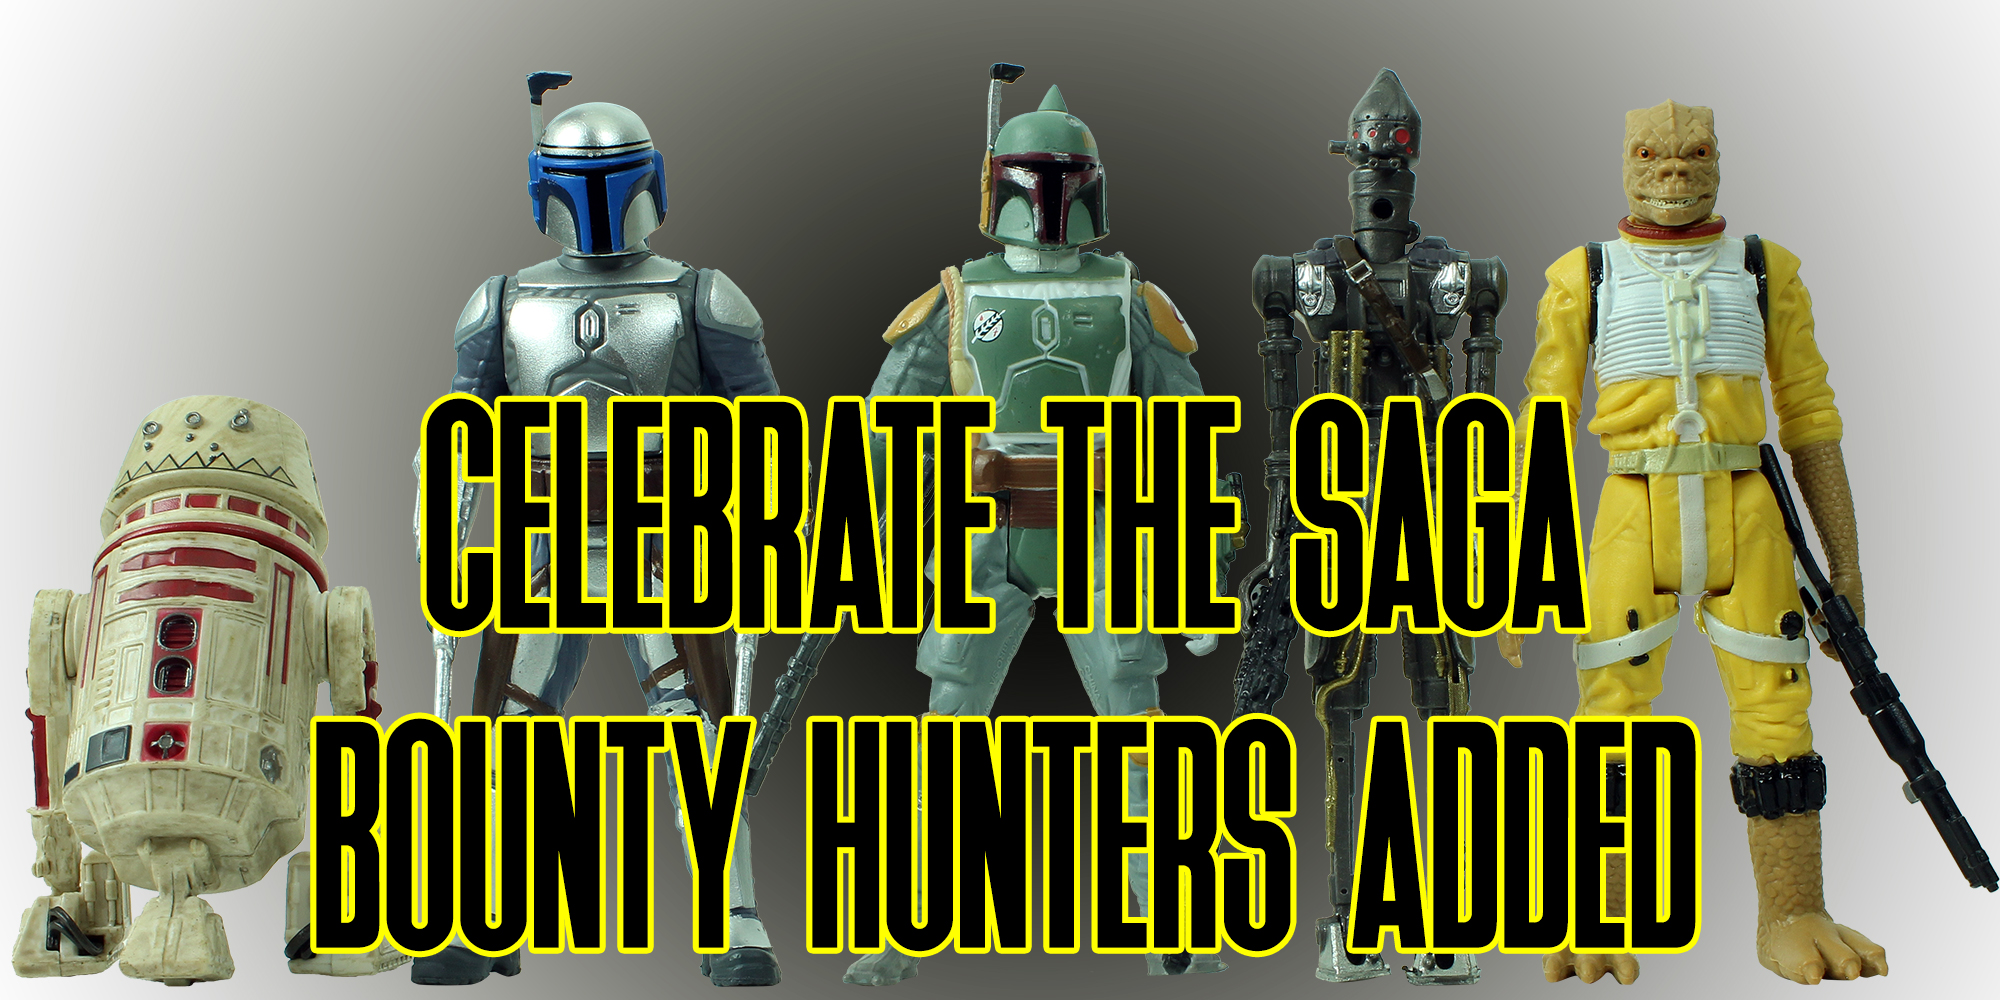 Celebrate The Saga - Bounty Hunters - Added To The Database!